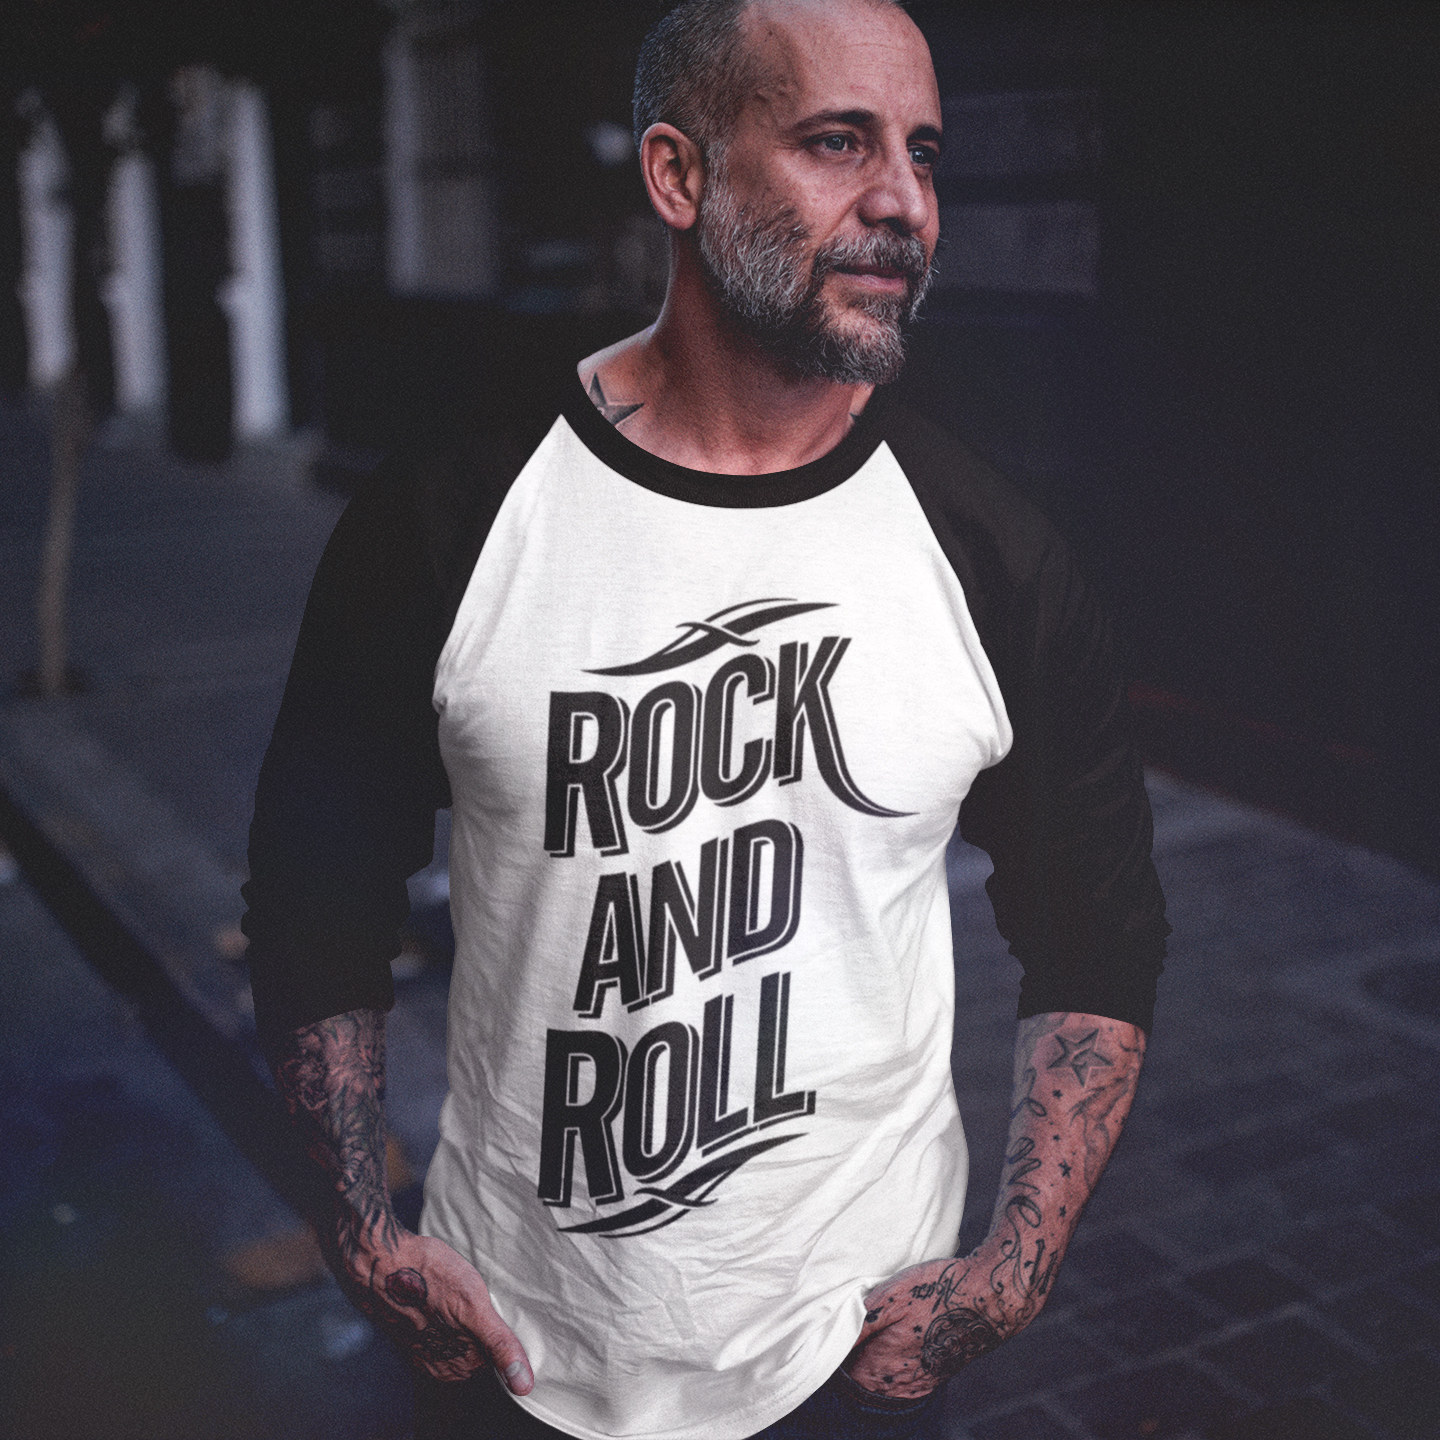 Pins \u0026 Bones Classic Rock Top, Vintage Rock Tee, Rock Star Inspired Raglan  Baseball Rock And Roll T-Shirt